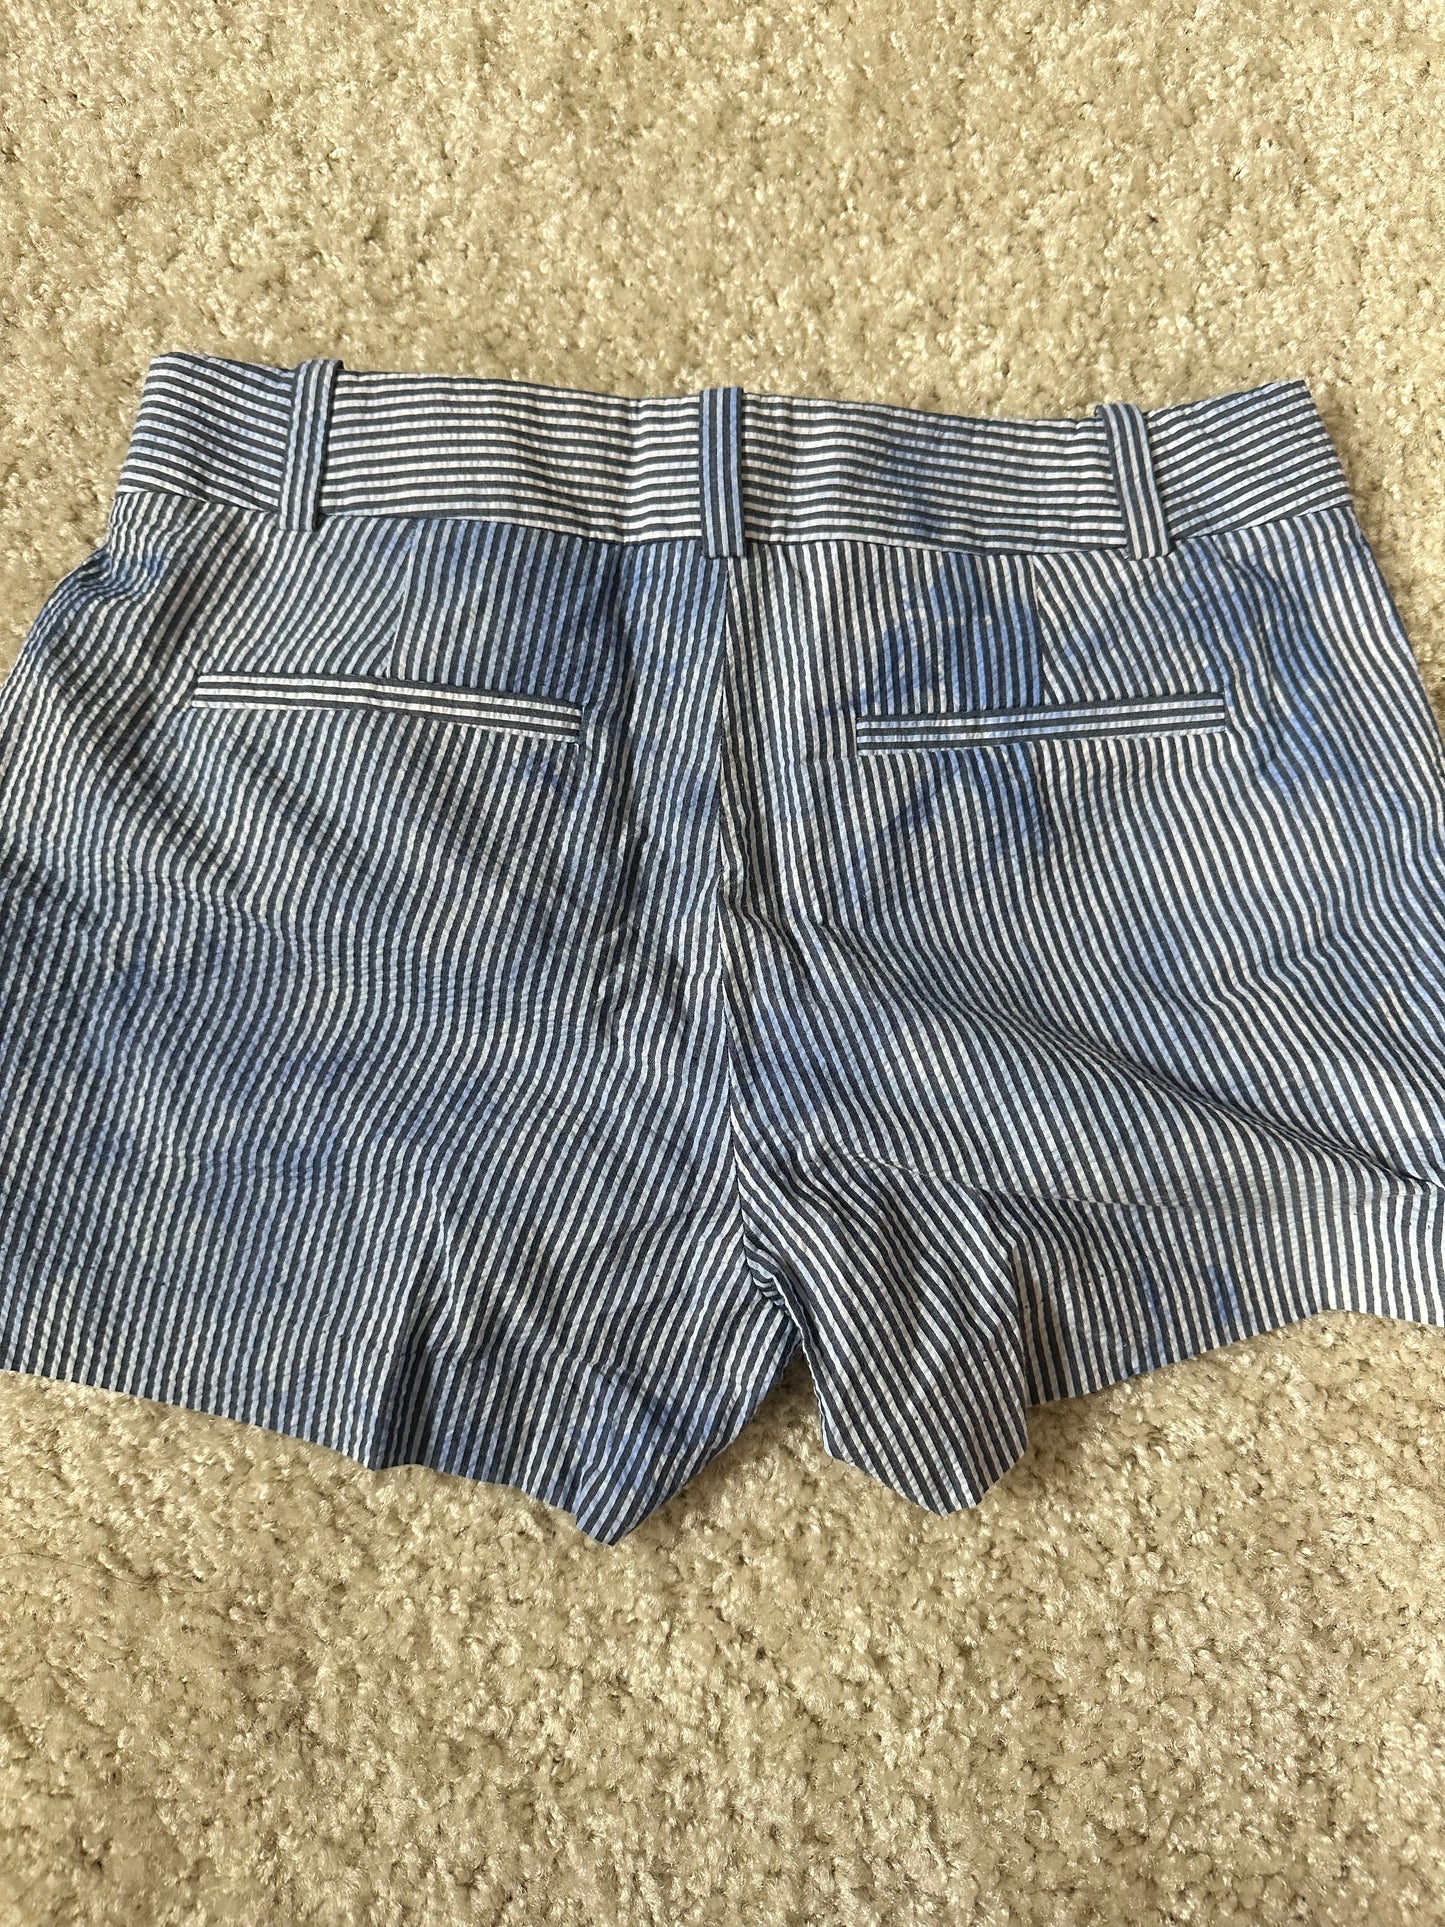 Women's J. Crew 00 Chino Blue Tie-dye Shorts